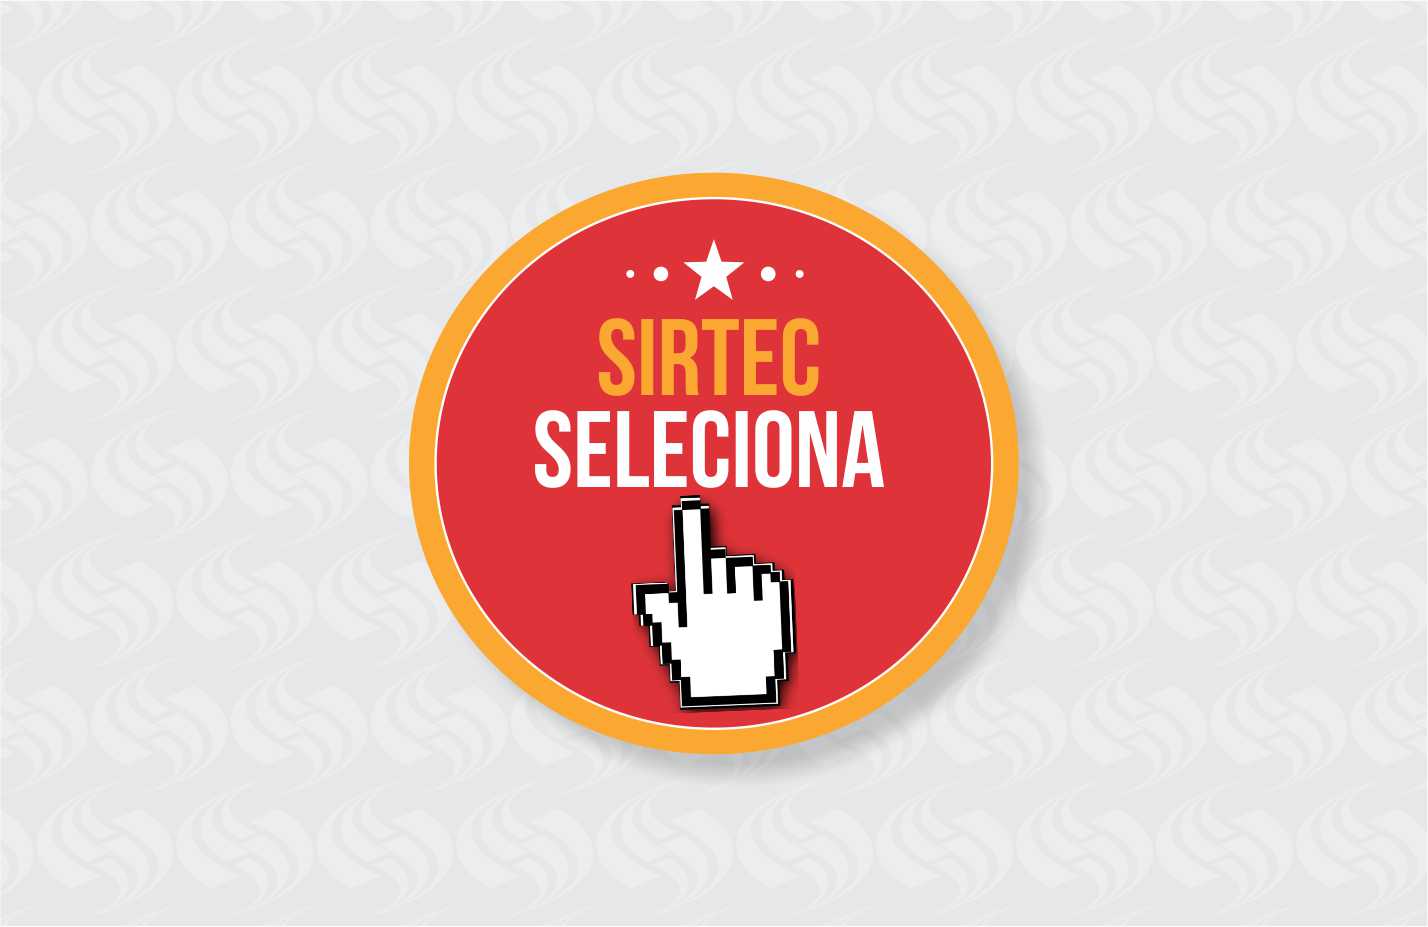 SIRTEC SELECIONA icon